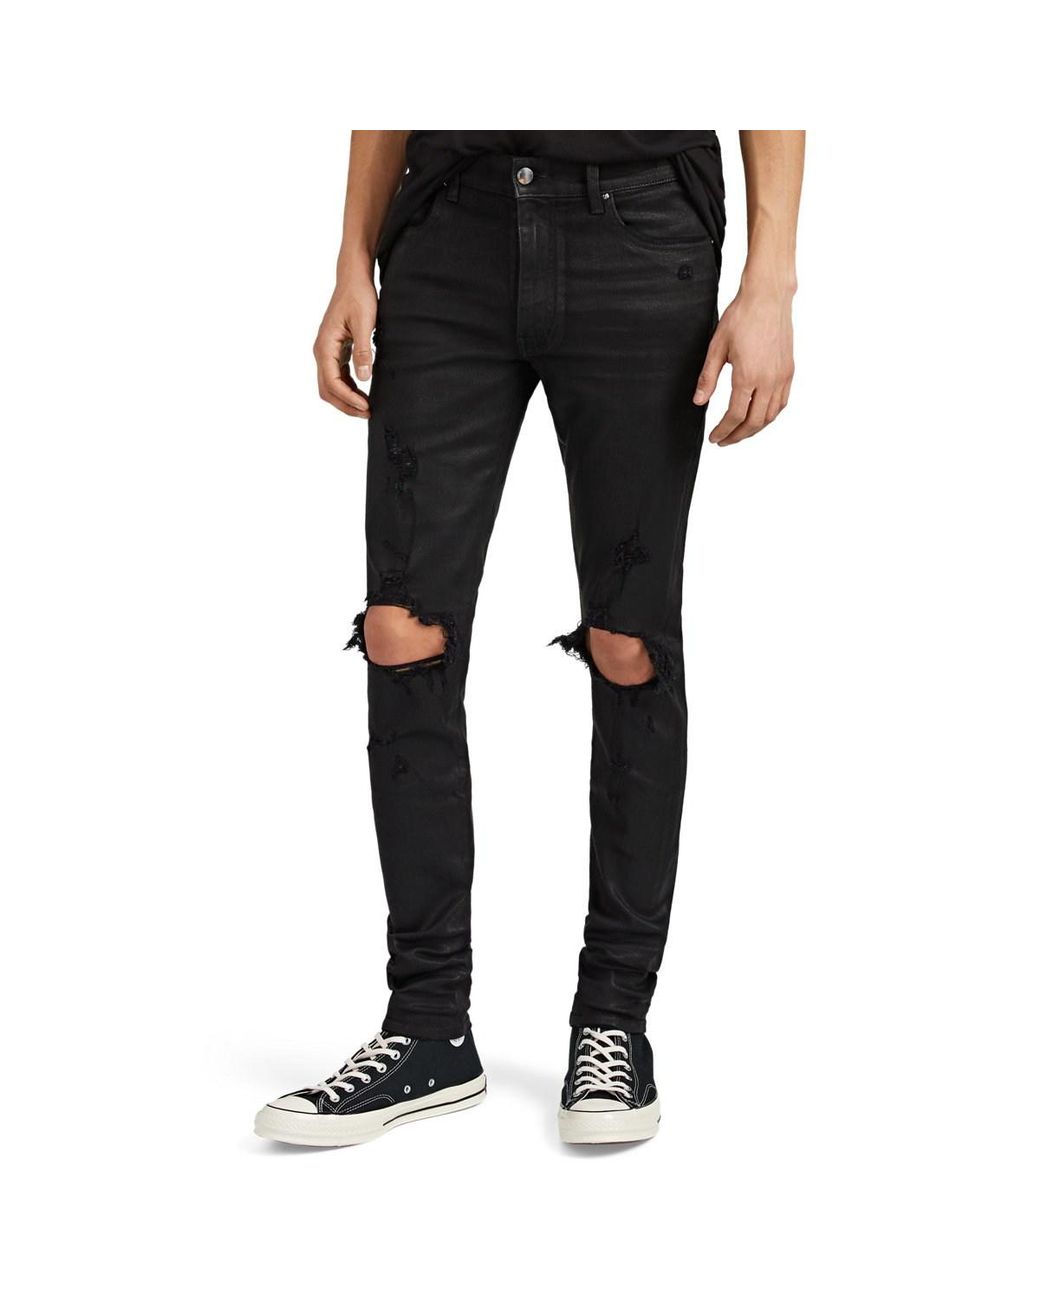 Amiri Denim Thrasher Coated Skinny Jeans in Black for Men - Lyst